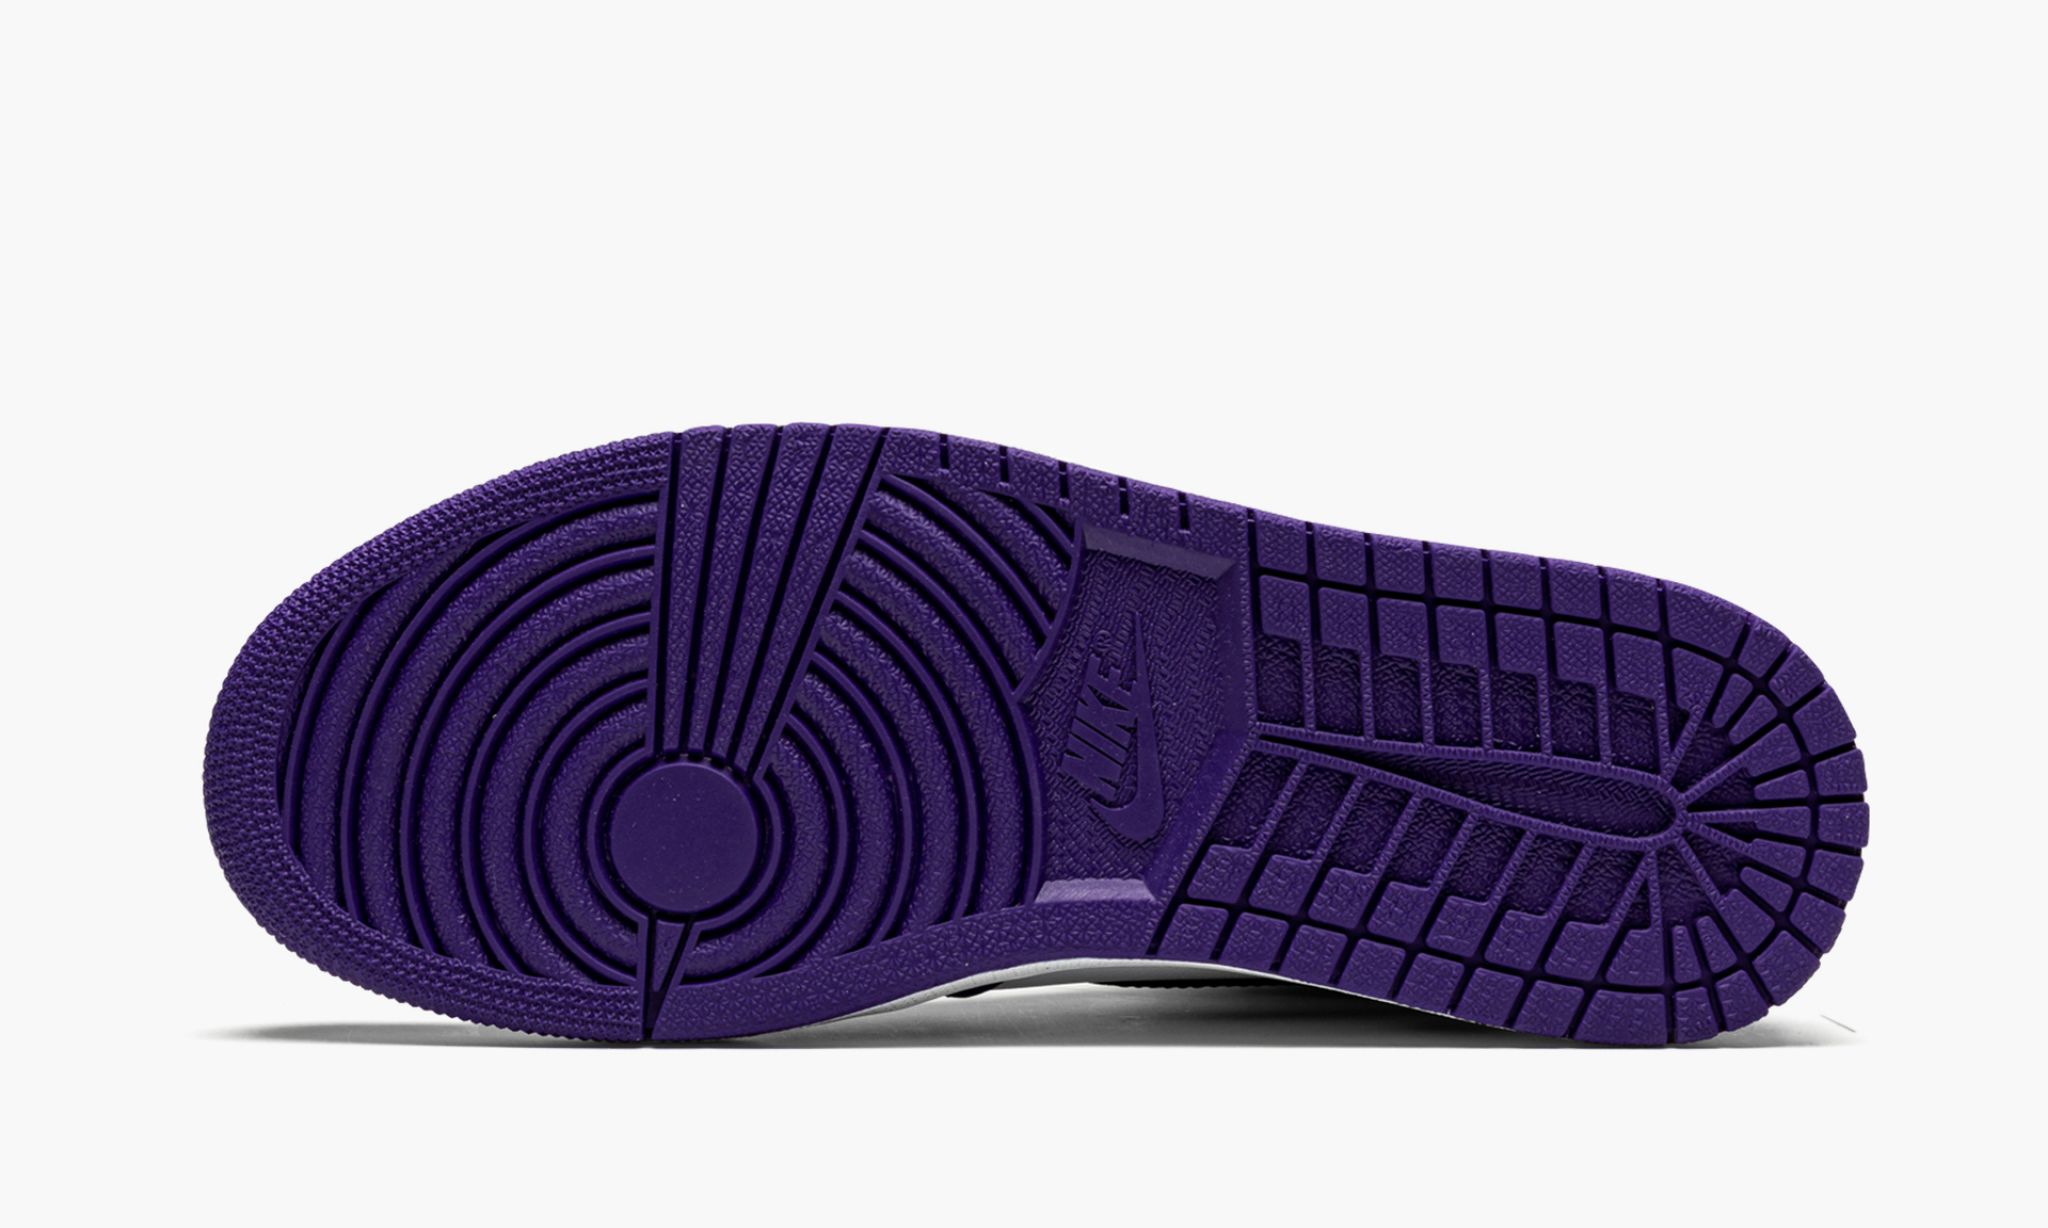 Air Jordan 1 High Court Purple 2.0